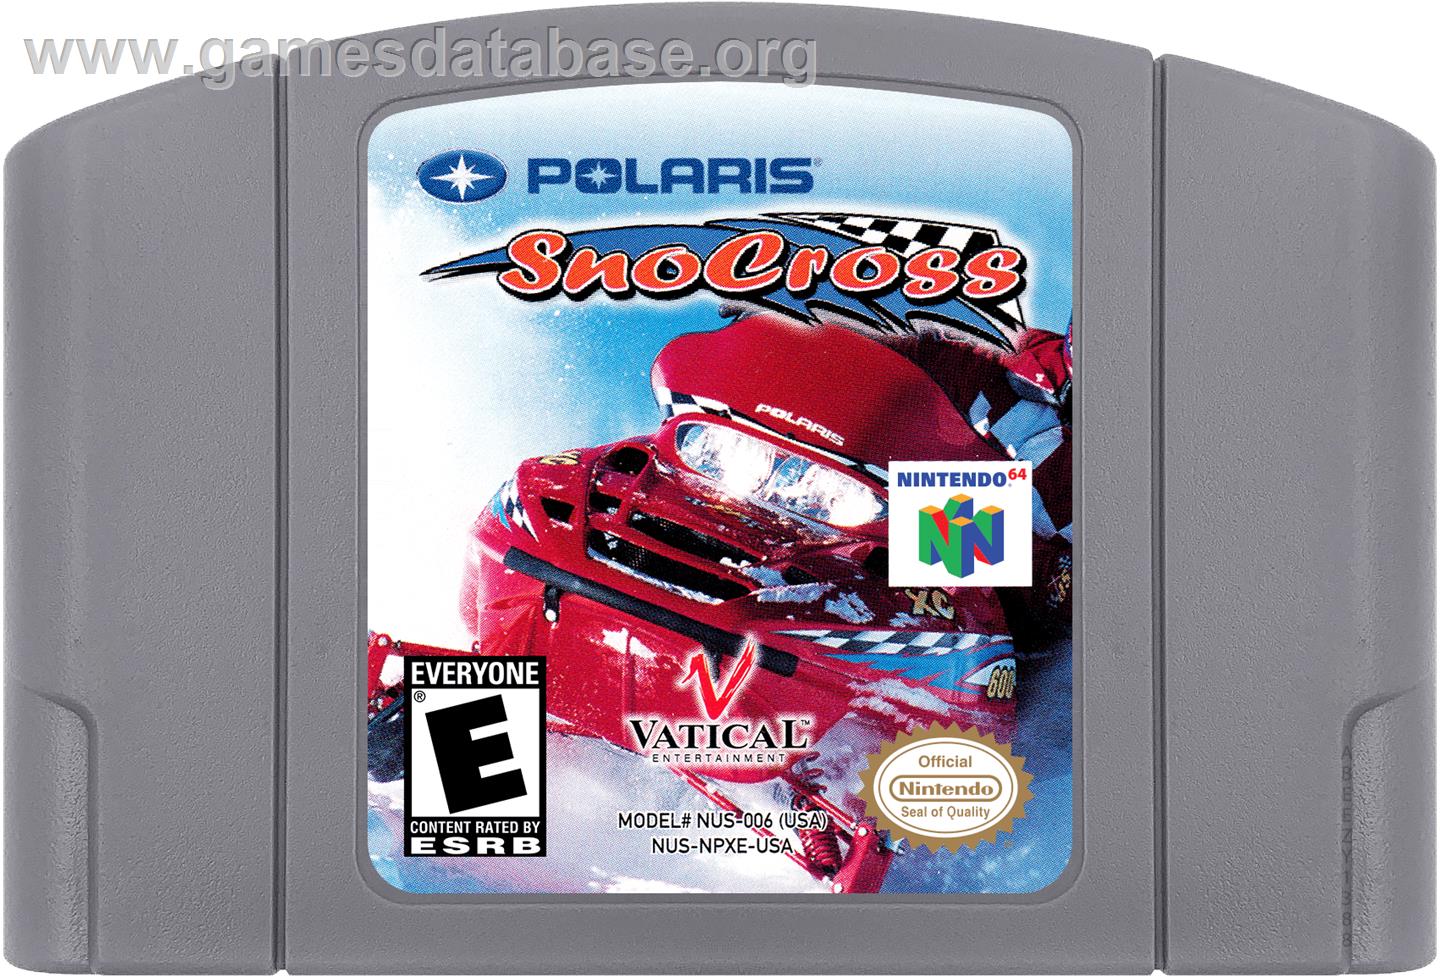 Polaris SnoCross - Nintendo N64 - Artwork - Cartridge